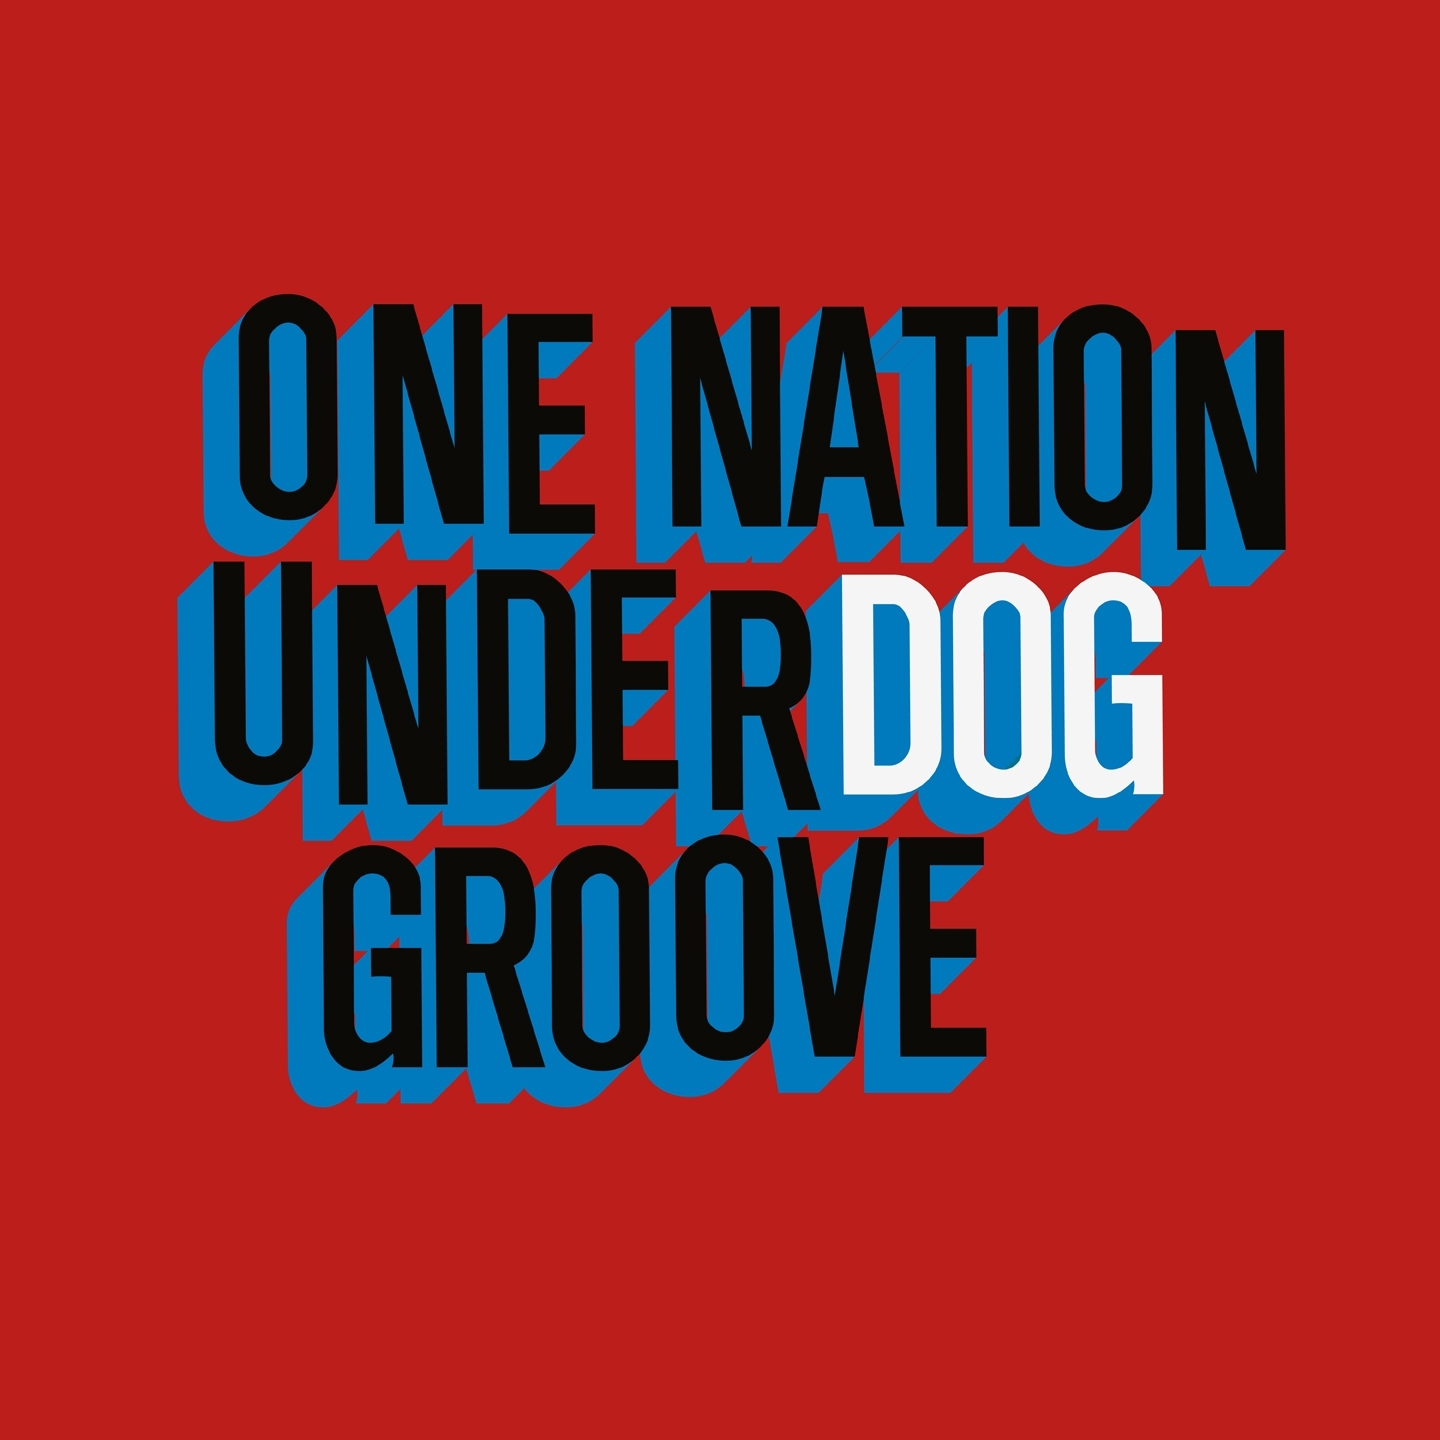 One Nation Underdog Groove